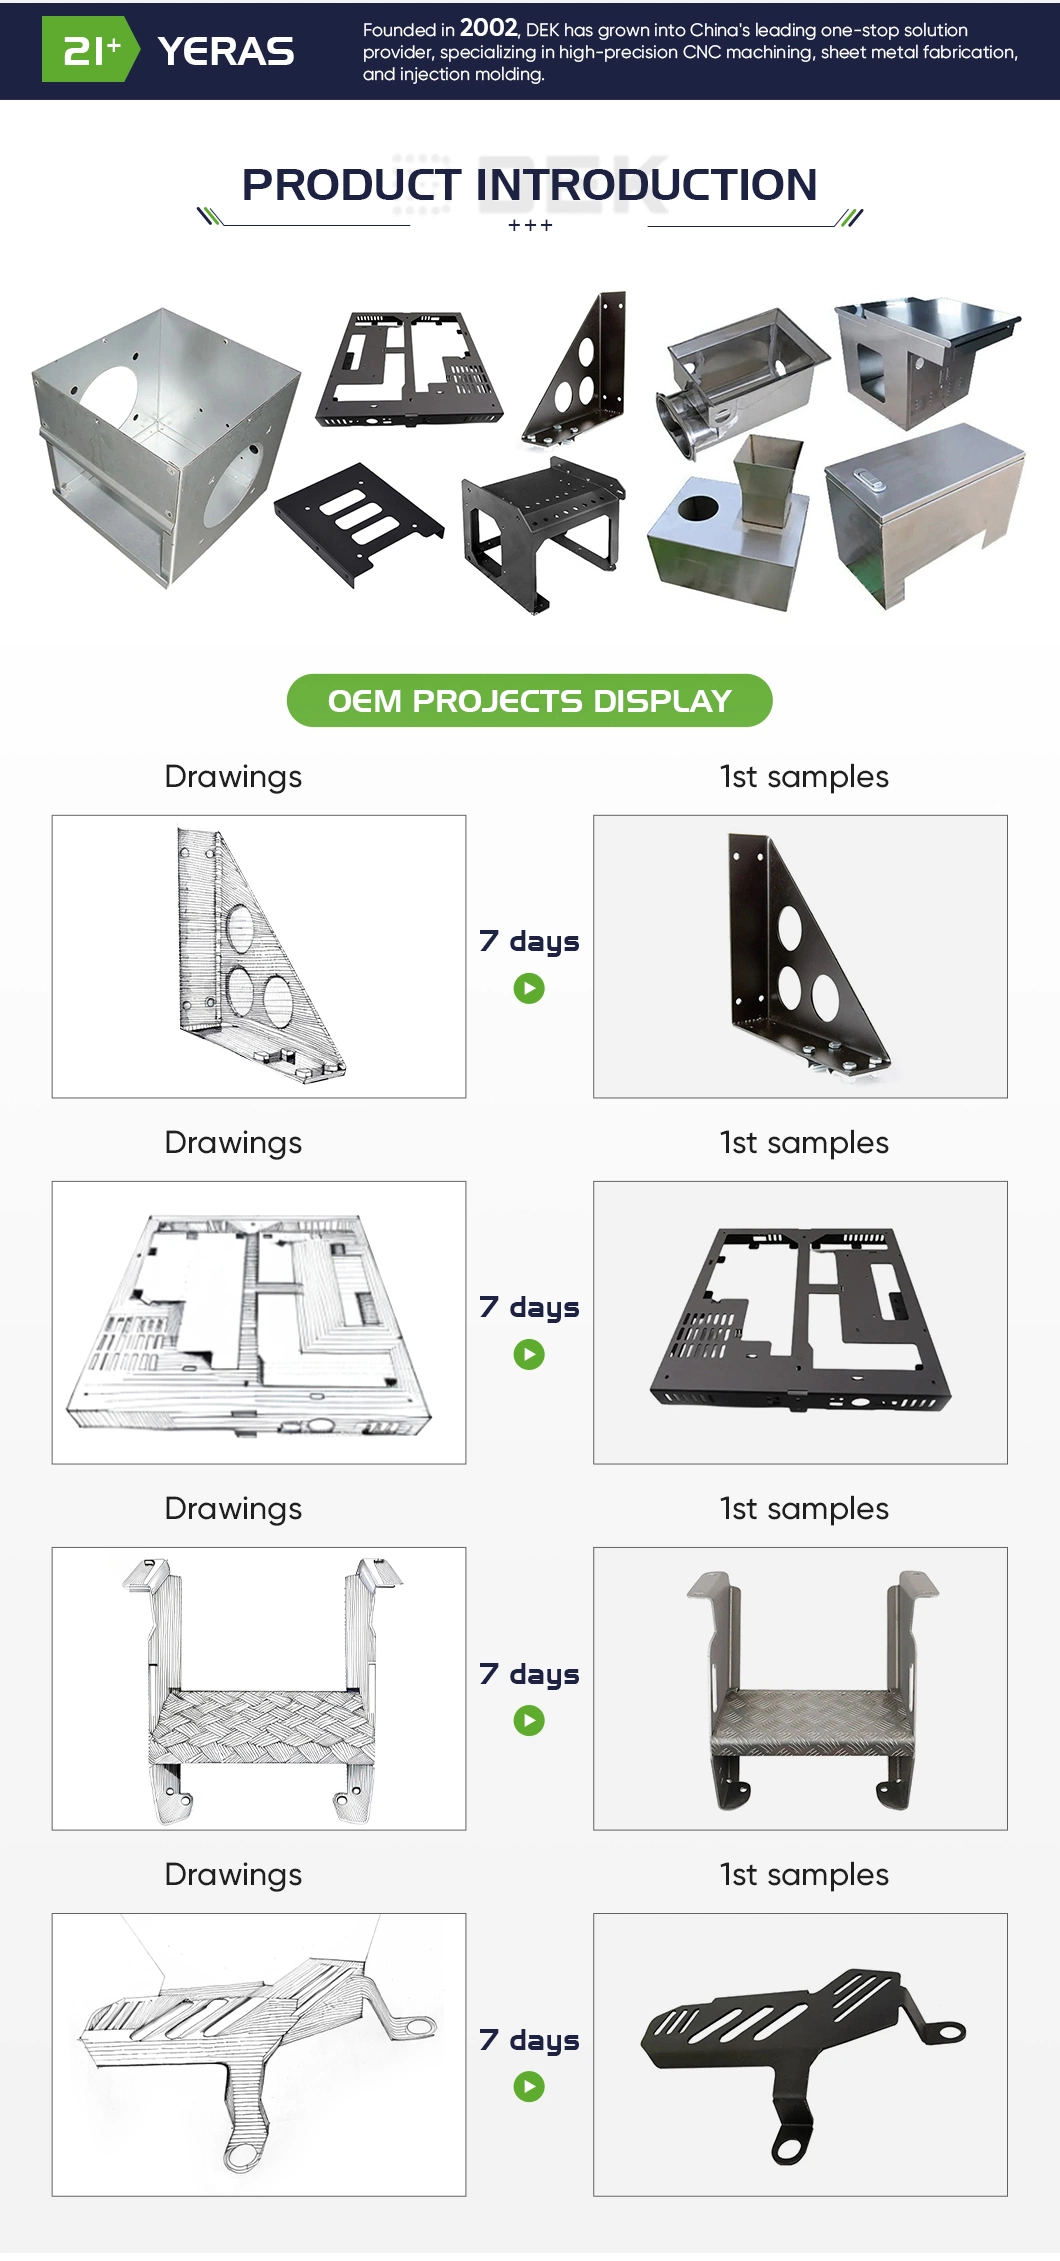 Precise Process Custom Metal Works Services OEM Sheet Metal Fabricator